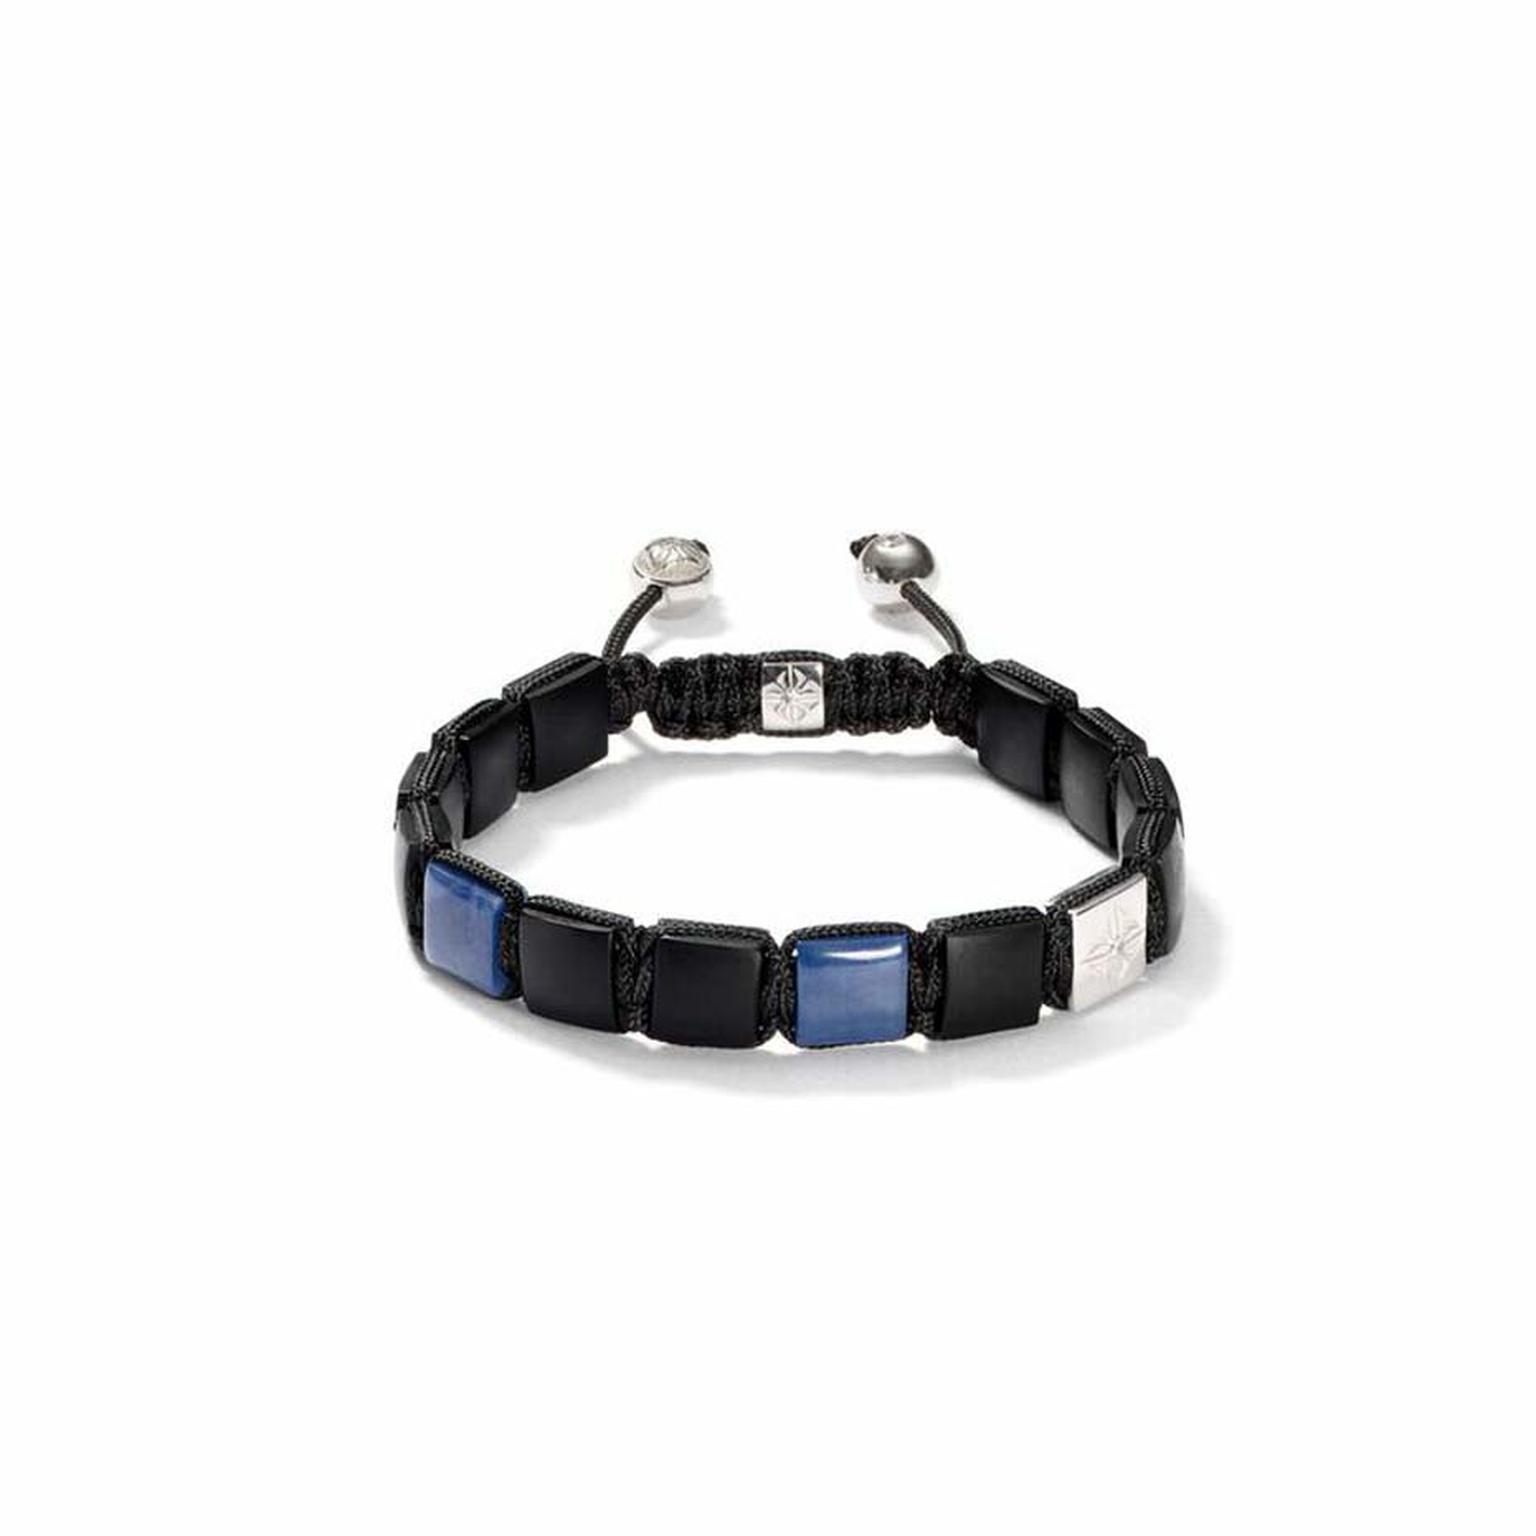 Shamballa Jewels Lock bracelet featuring blue sapphires.